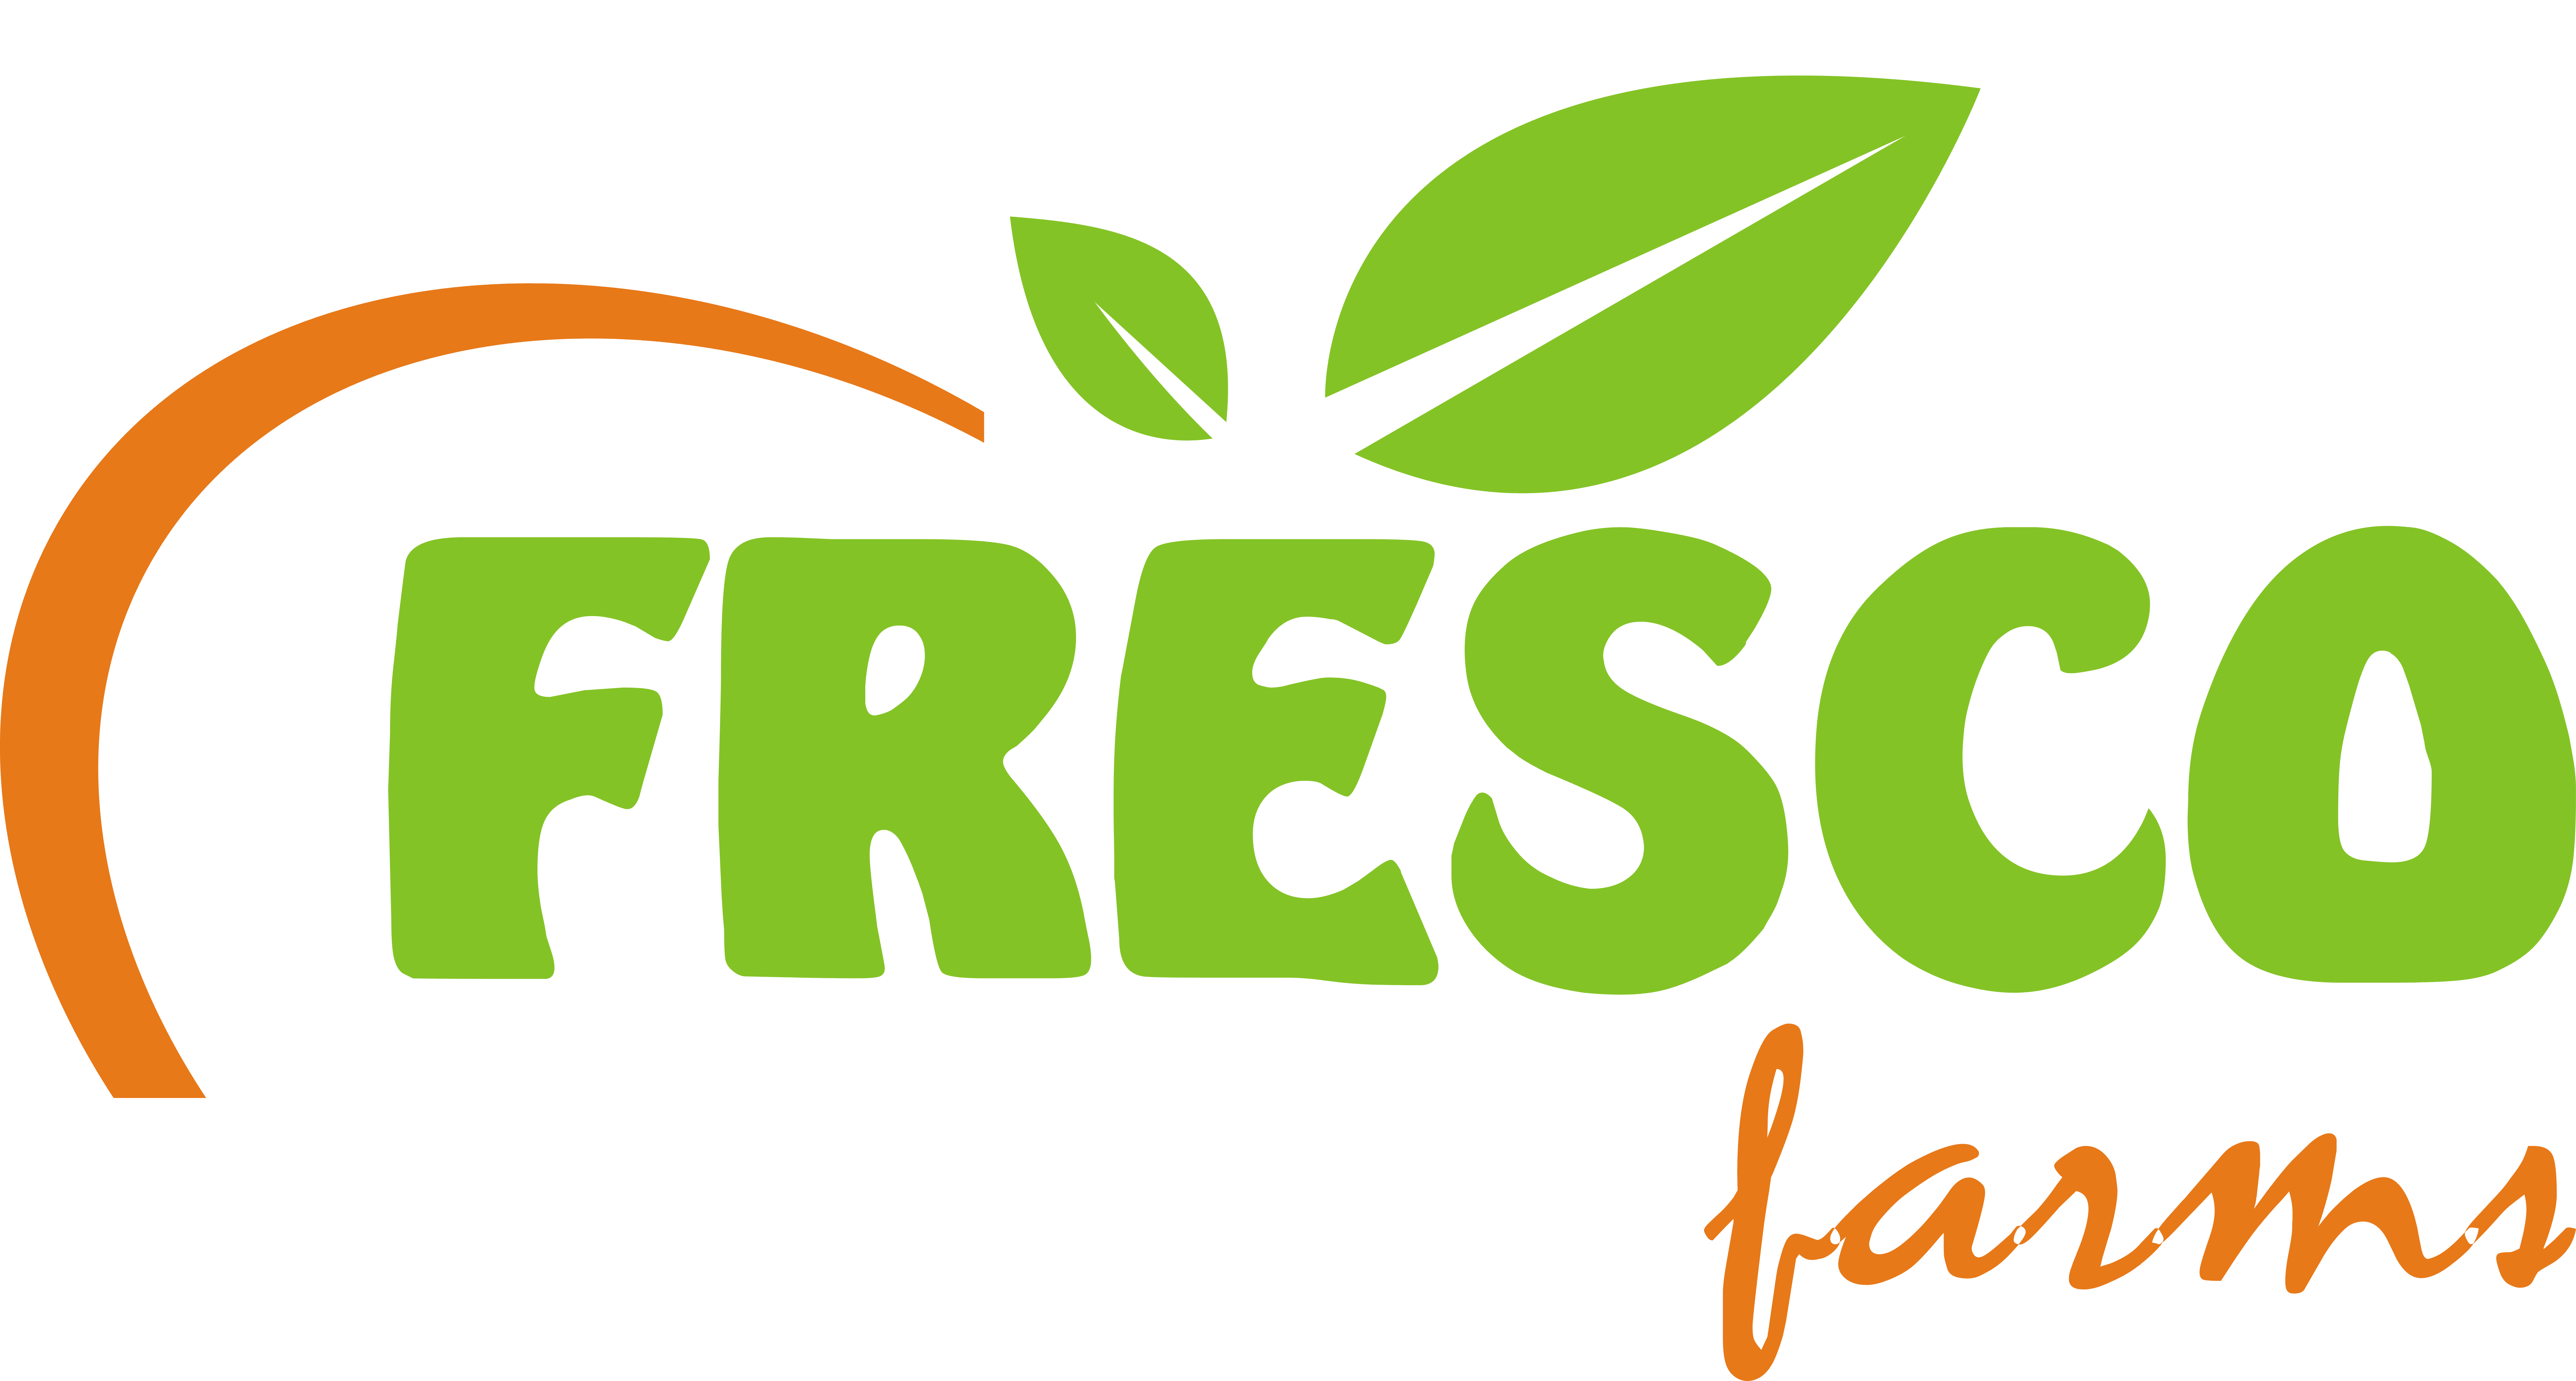 Fresco Logo - Playful, Personable, Food Store Logo Design for FRESCO FARMS by ...